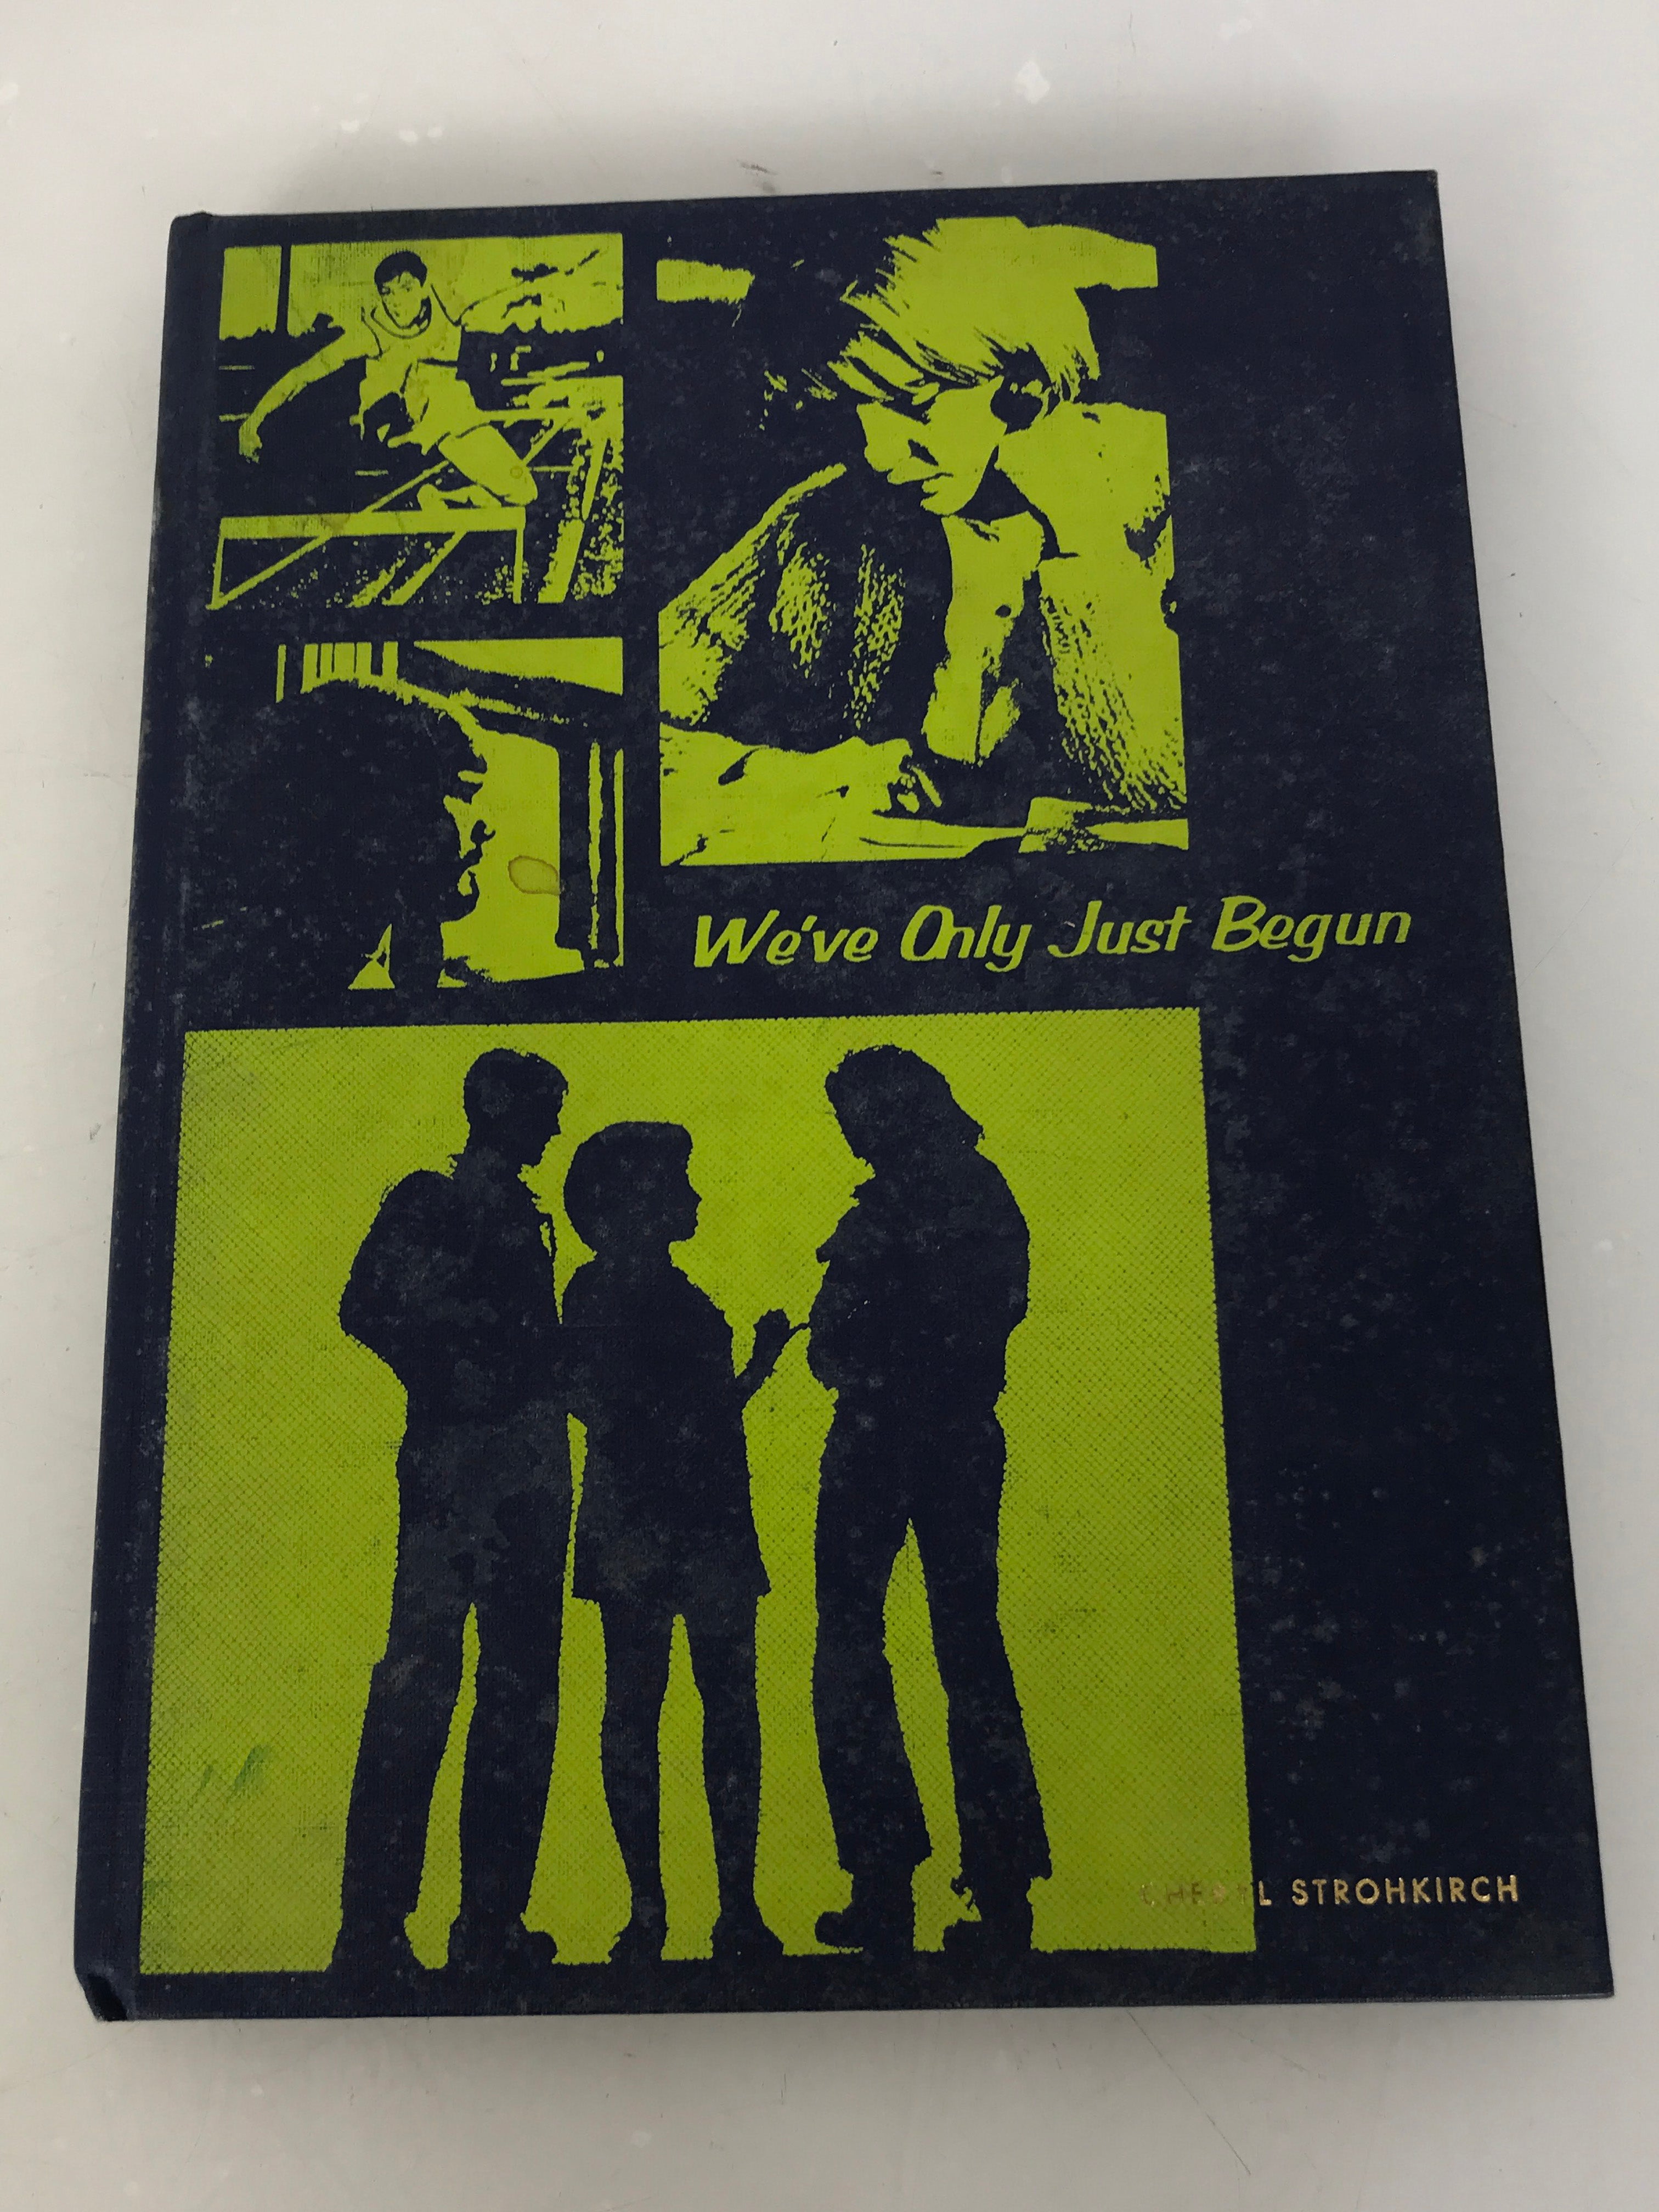 1939 Clay High School Yearbook Oregon Ohio – MSU Surplus Store